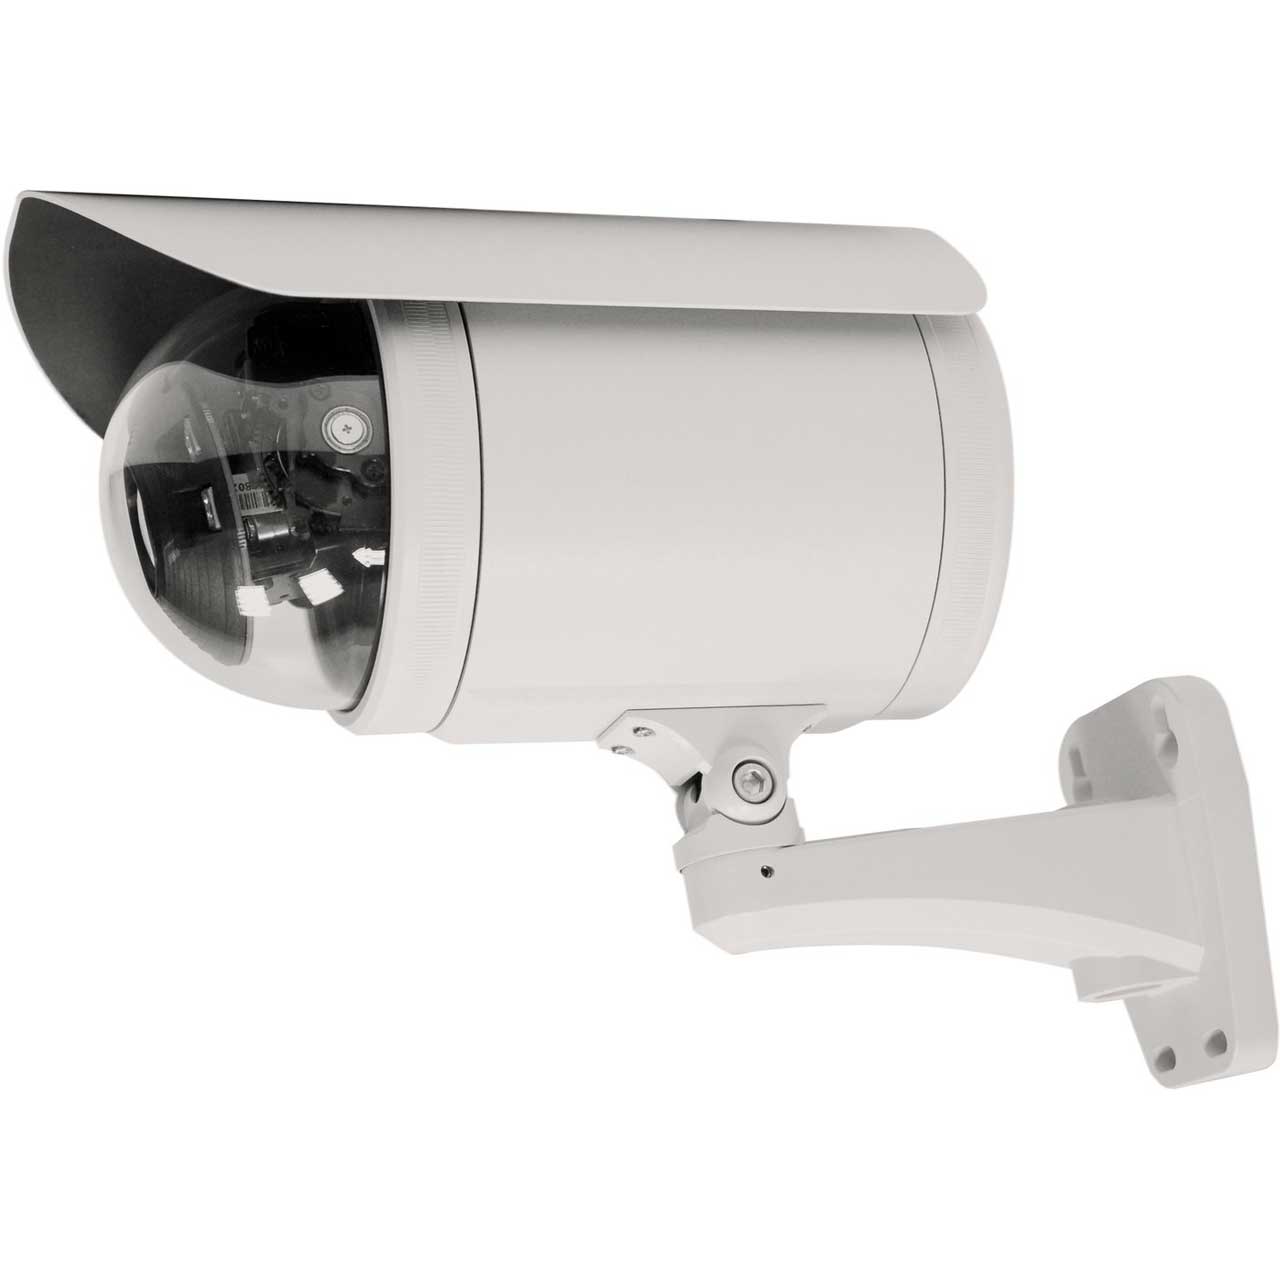 LevelOne FCS-5044 PTZ IP Network Camera - 2 MP - 10x Optical Zoom - 802.3af PoE - IR LEDs - Indoor/Outdoor  FCS-5044